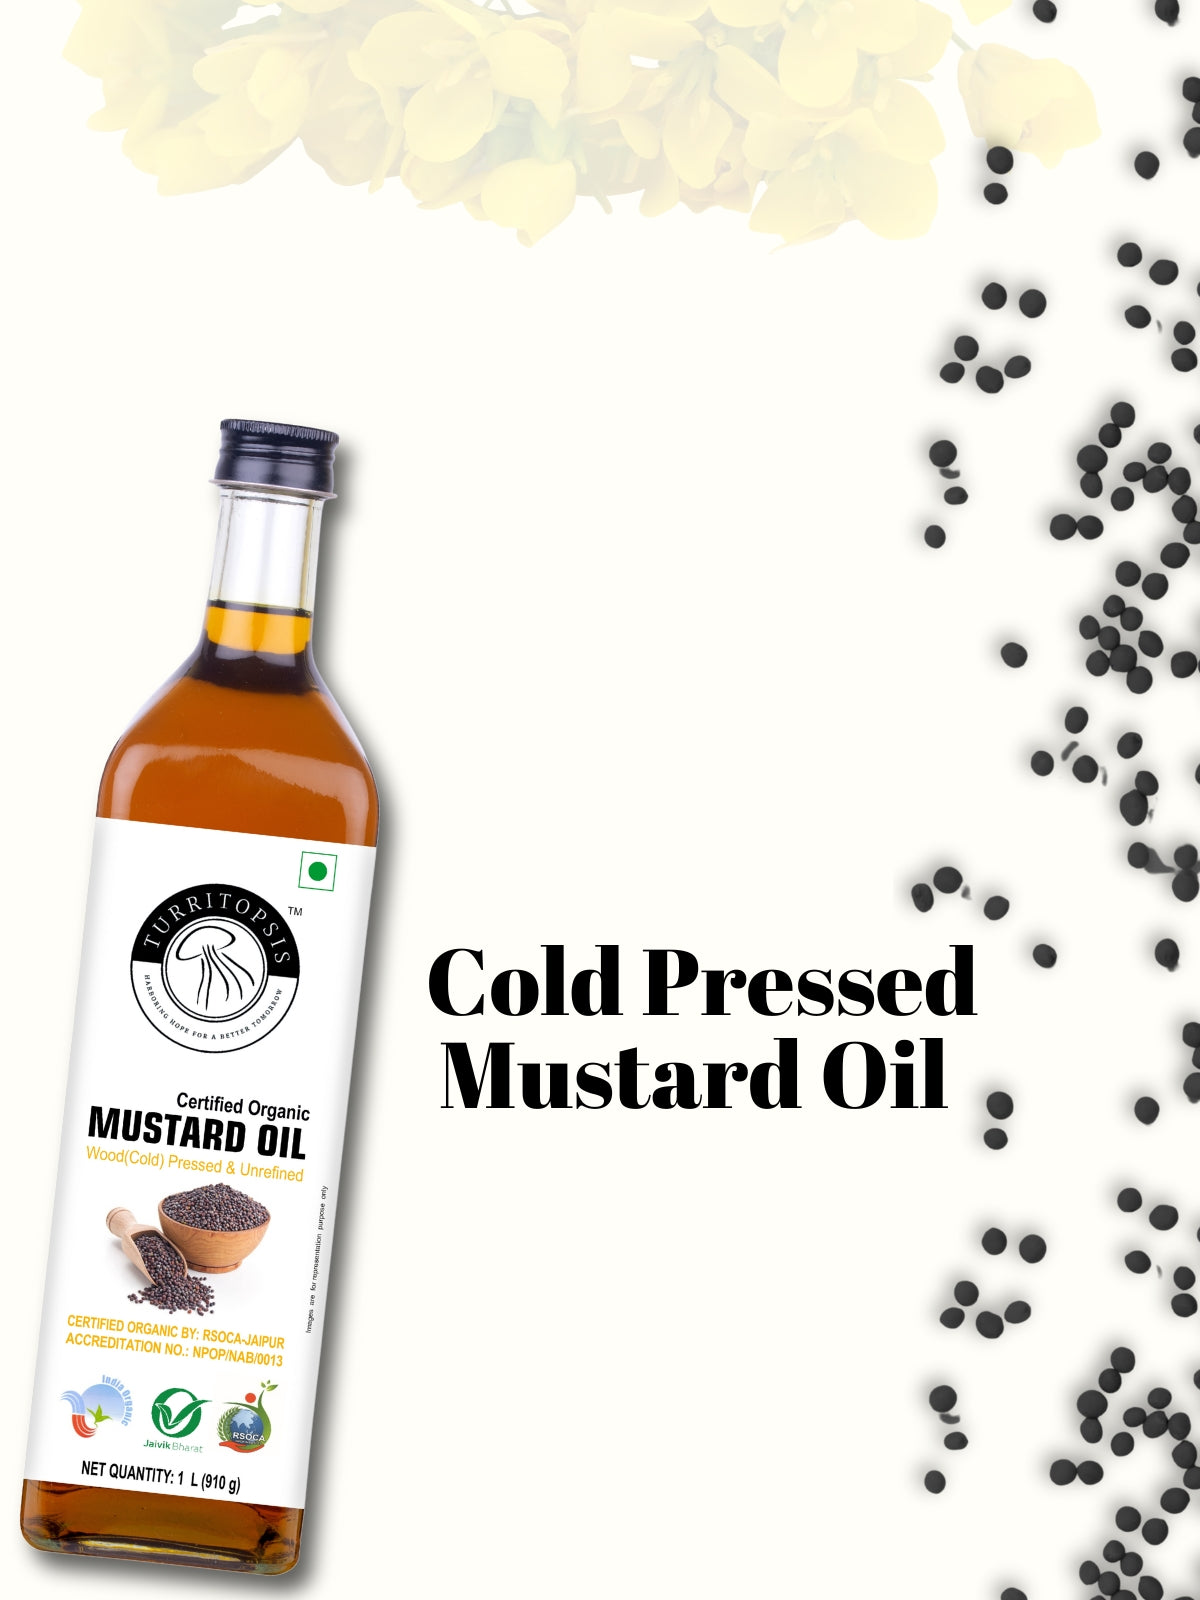 Mustard oil wood pressed